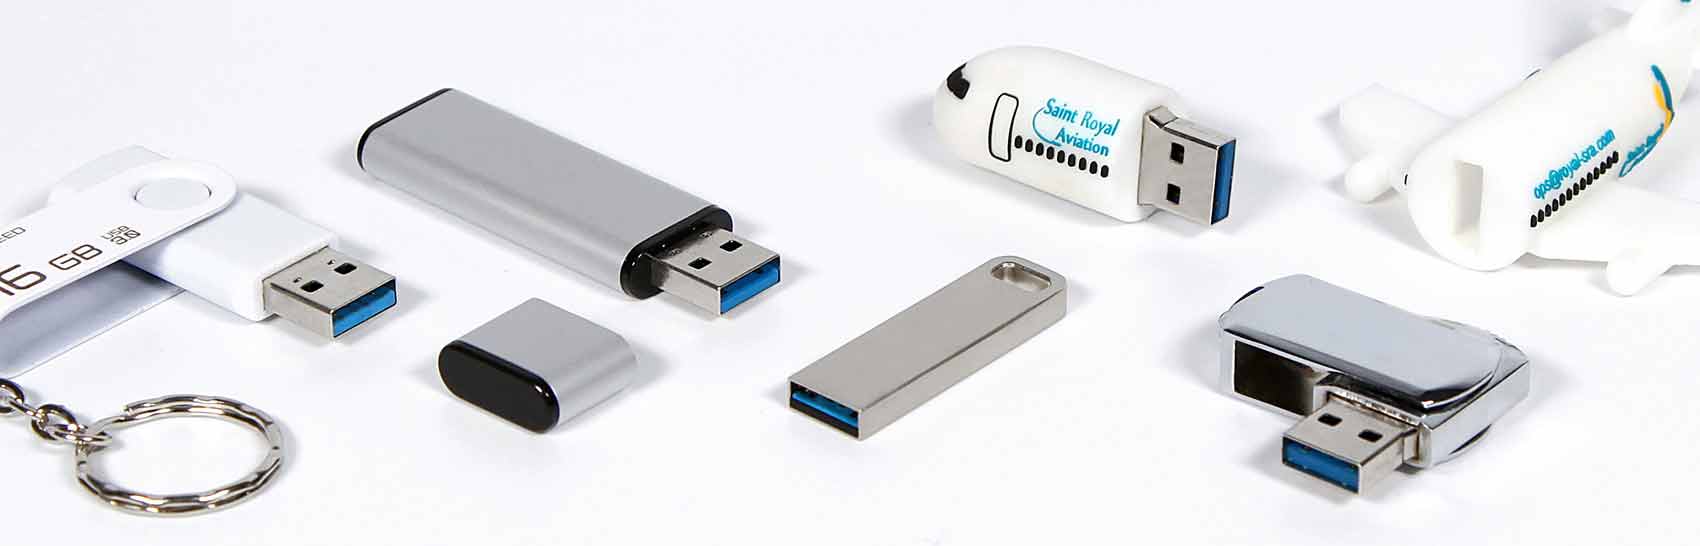 USB 3.0 Sticks